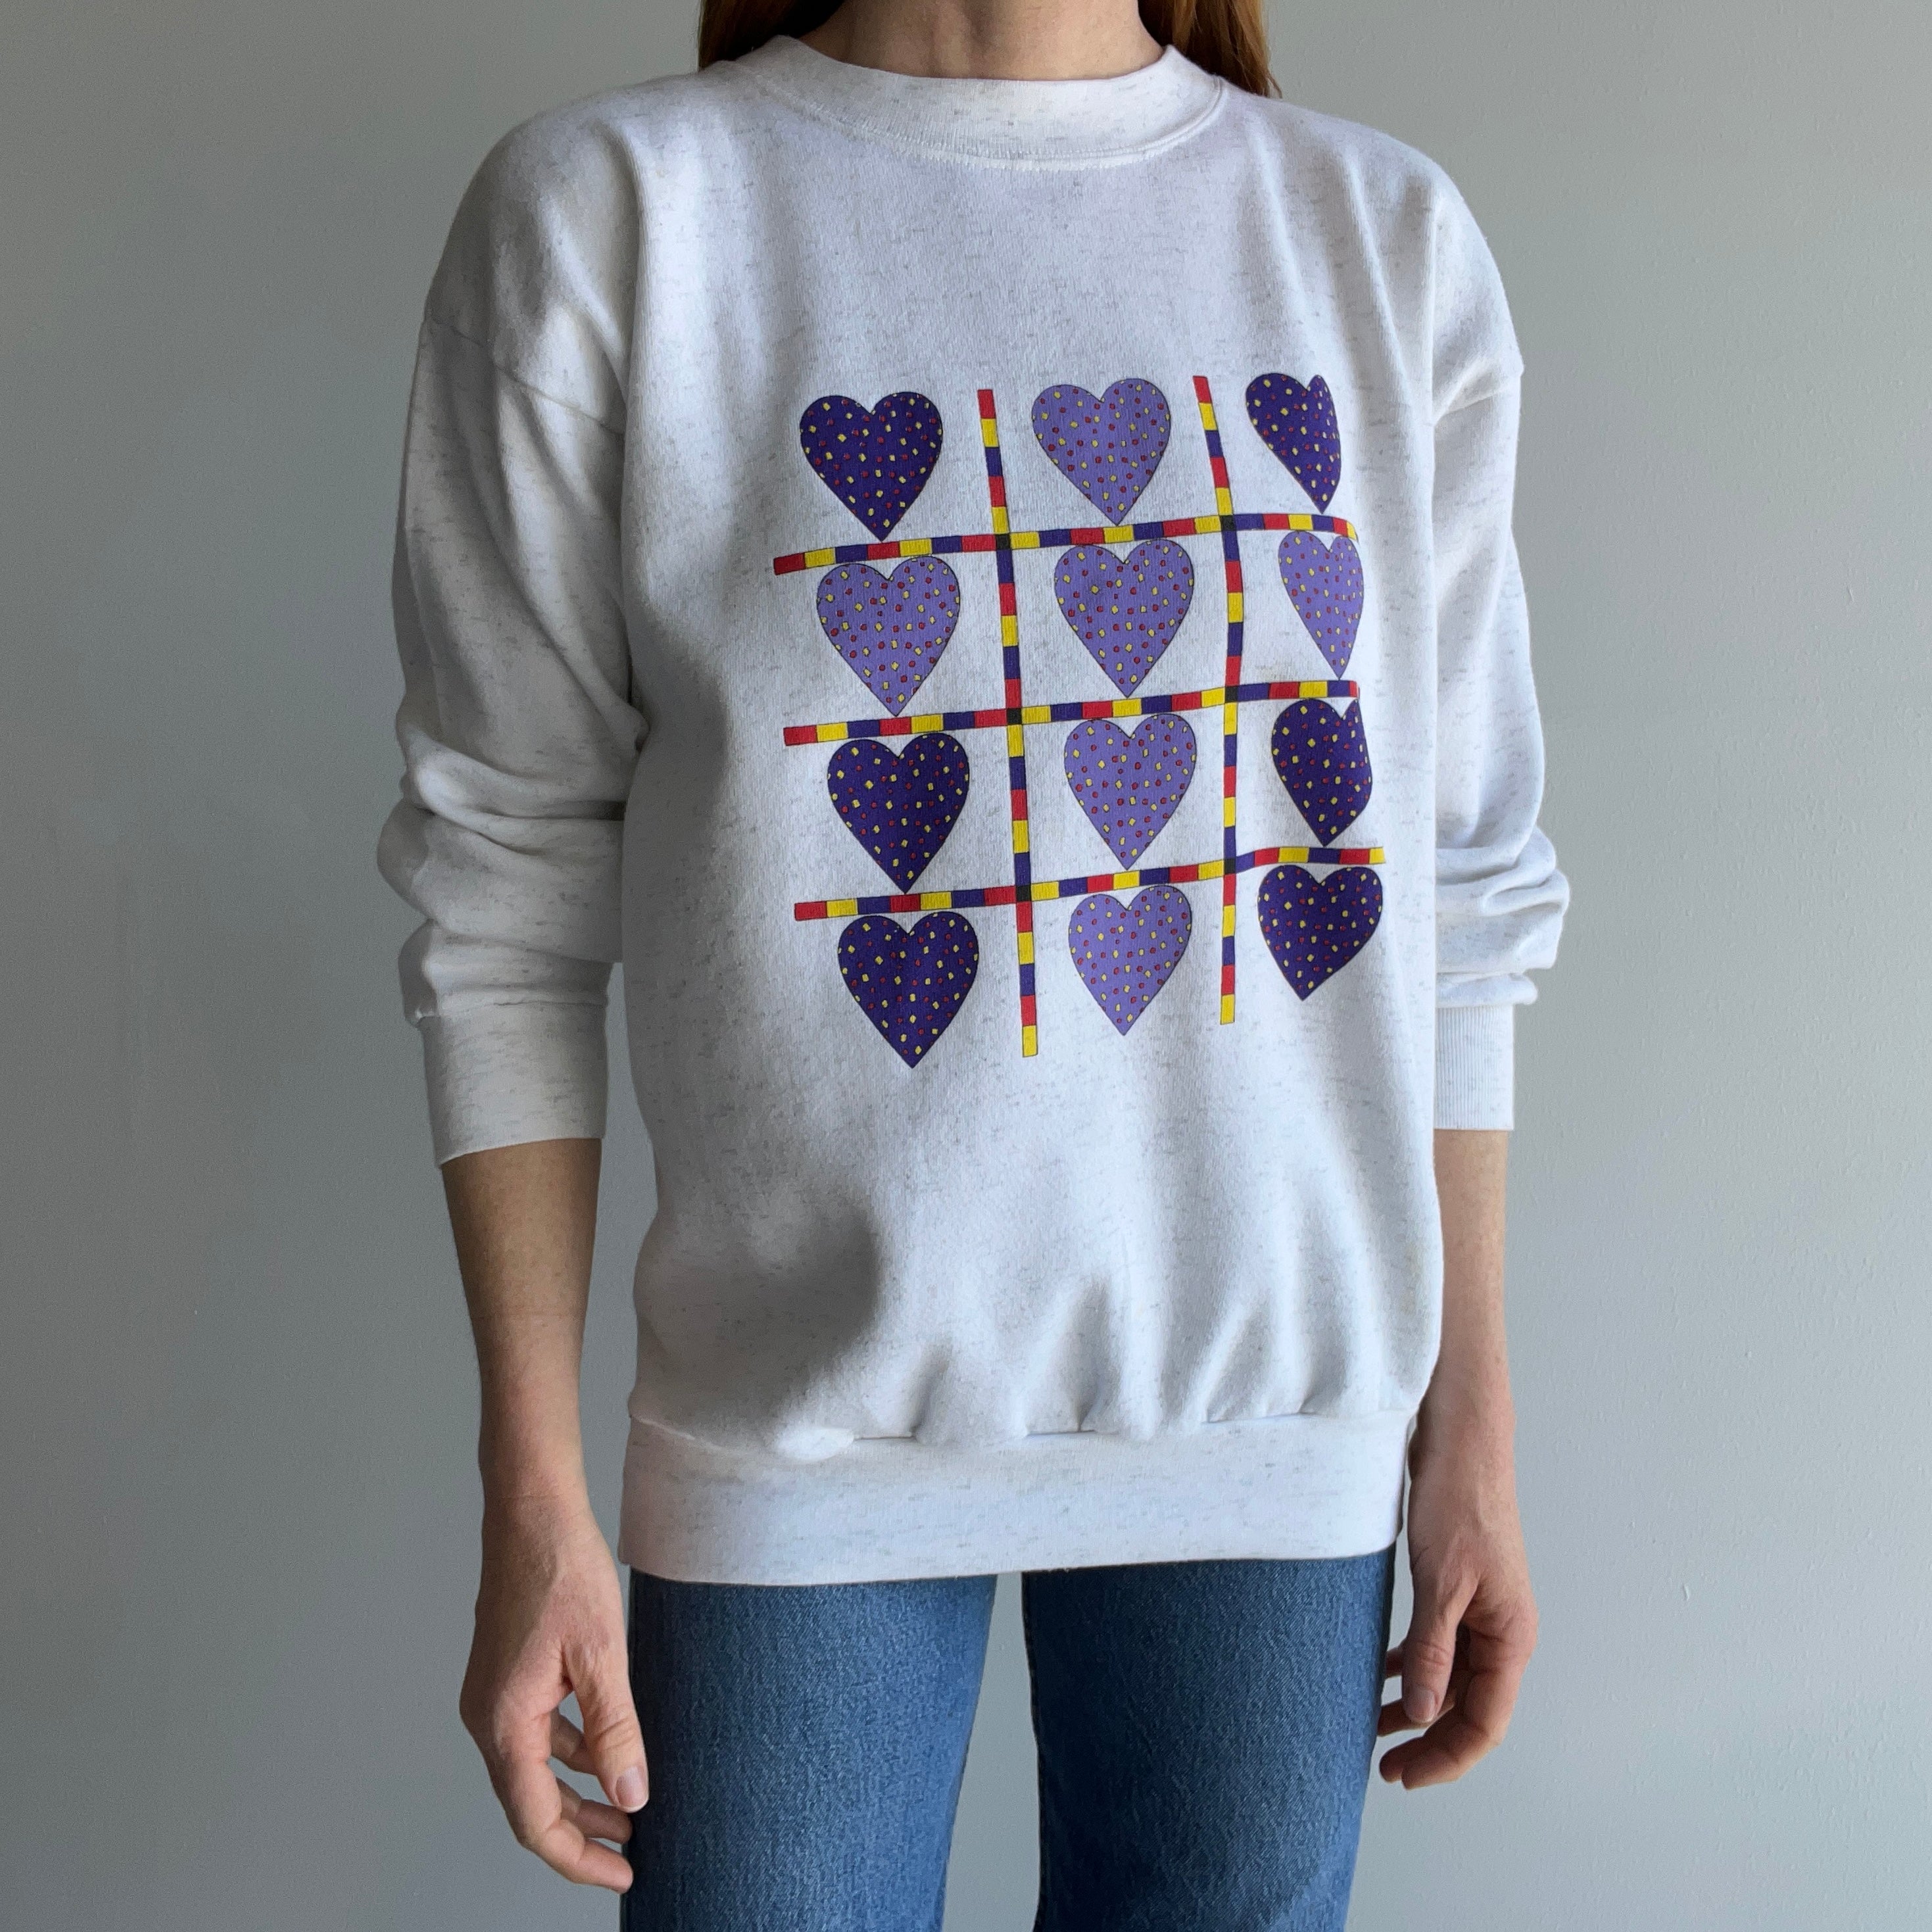 19980s Tic-Tac-Toe Style Heart Sweatshirt by Tultex